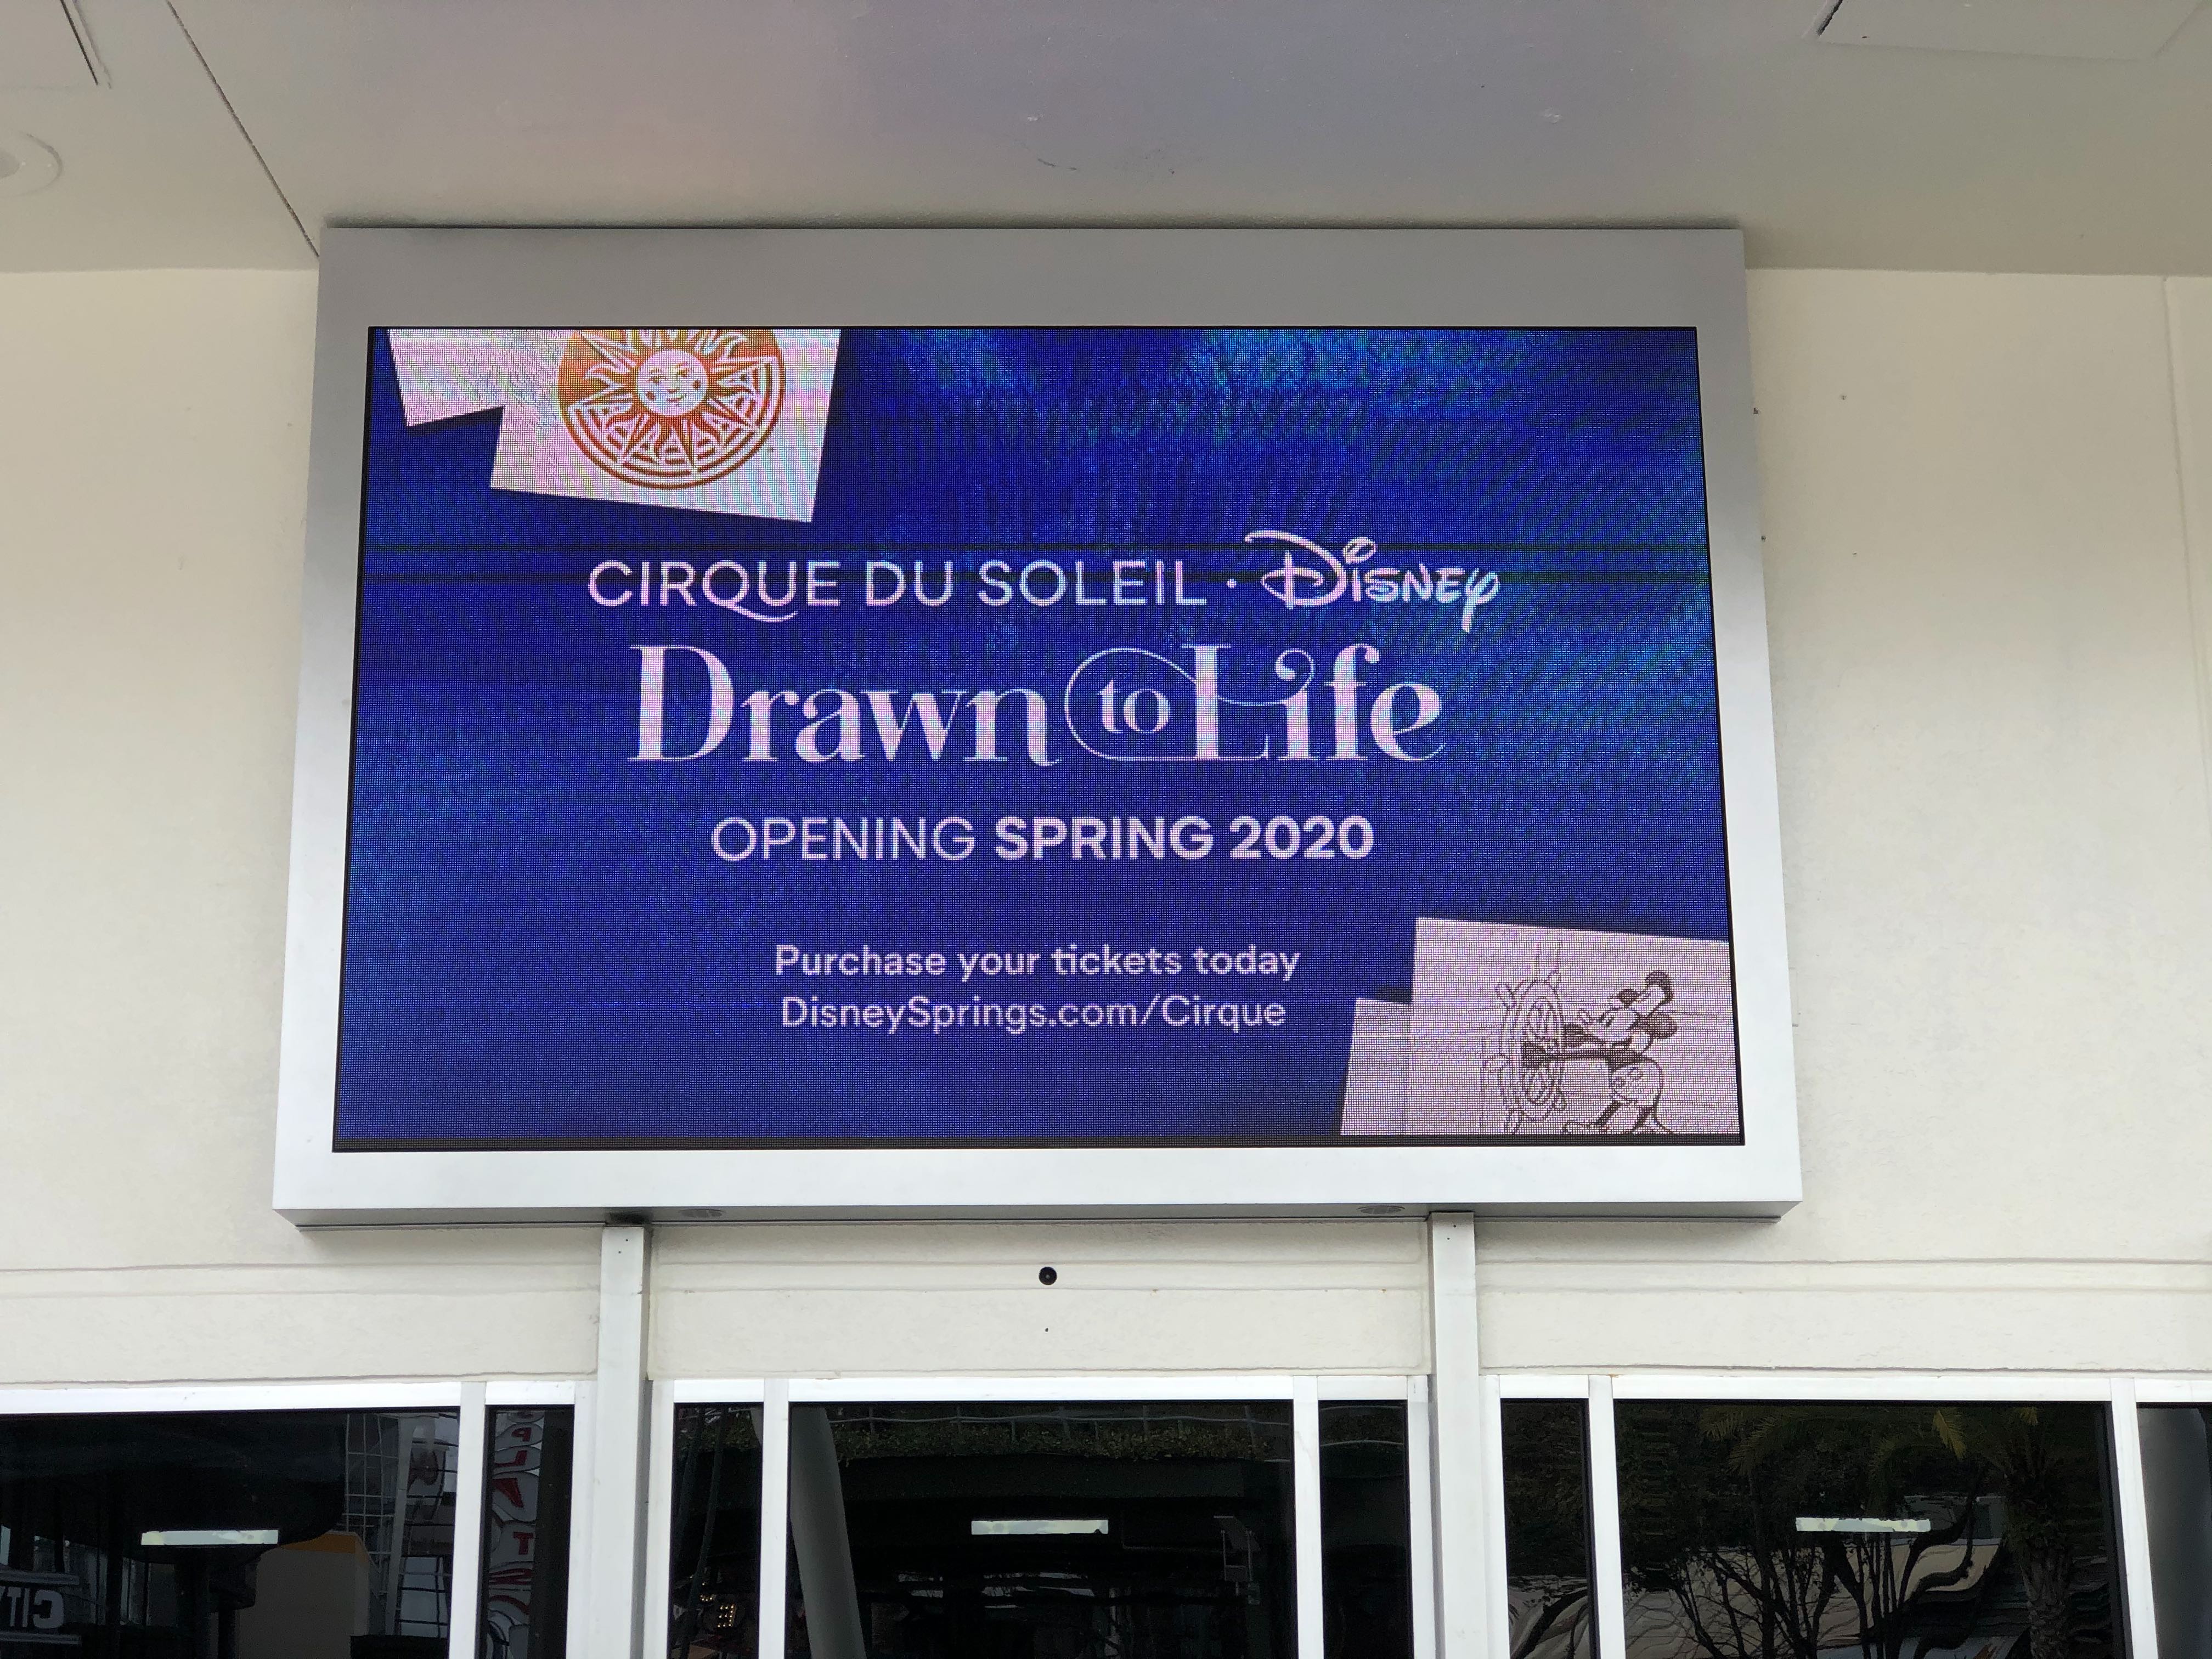 PHOTOS: Cirque du Soleil Signage Installed Ahead of New 